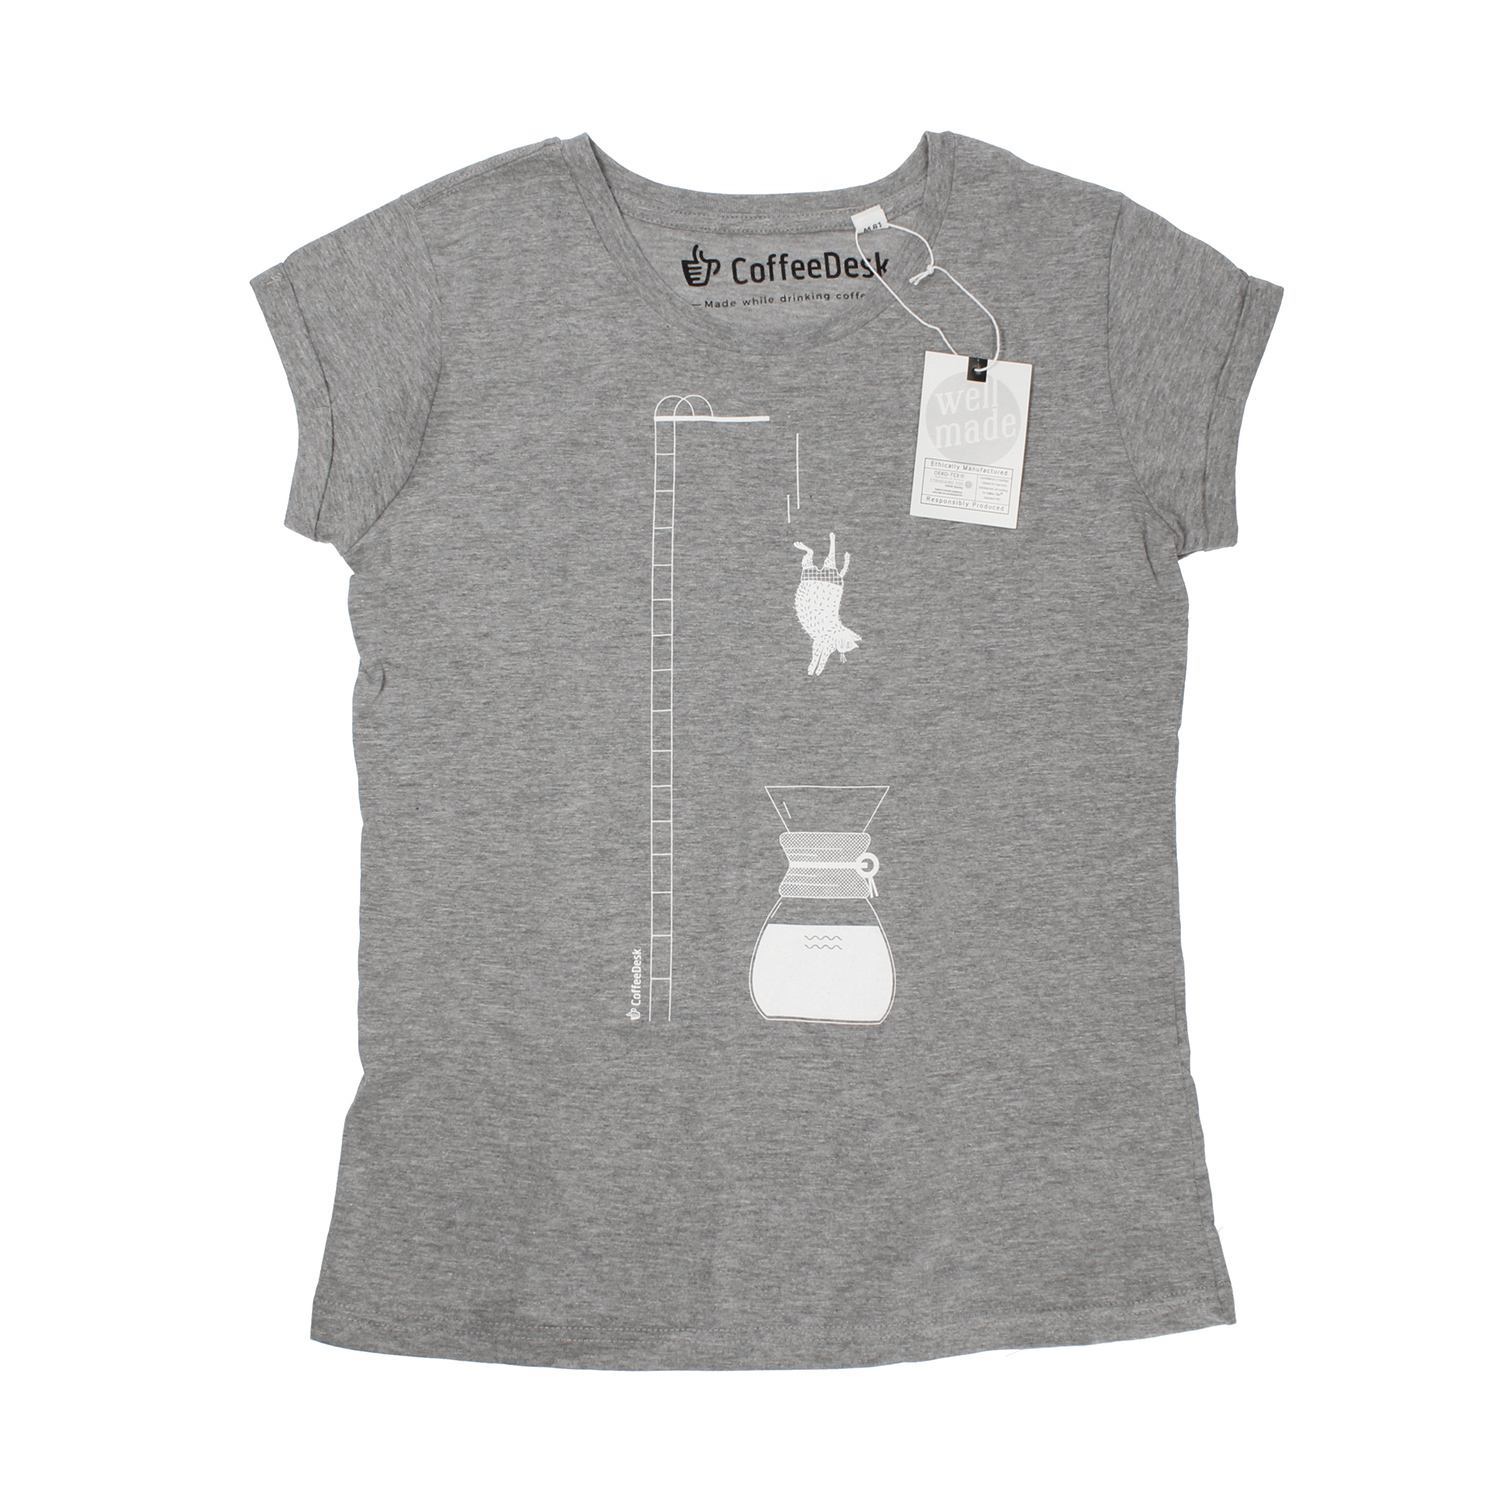 Coffeedesk Chemex Women's Grey T-shirt - M